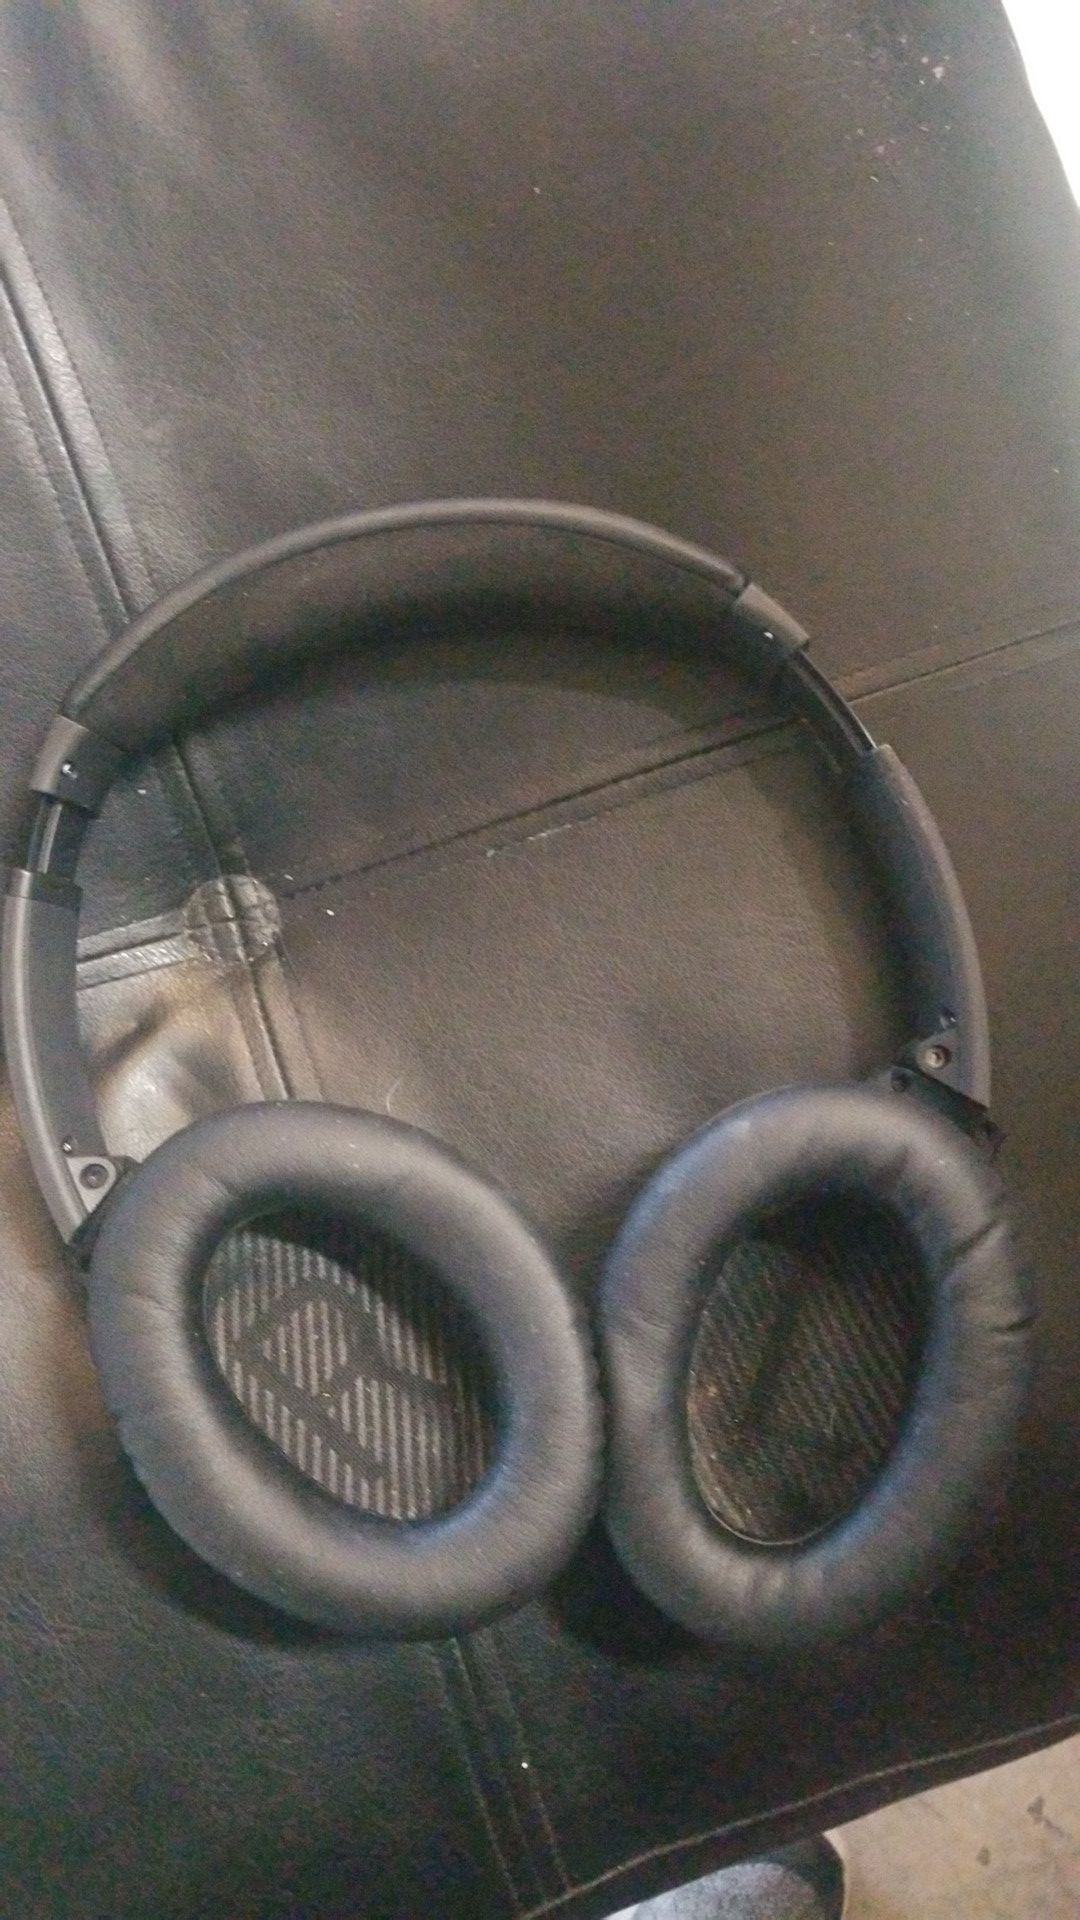 Bose quiet comfort 2 noise canceling headphones.